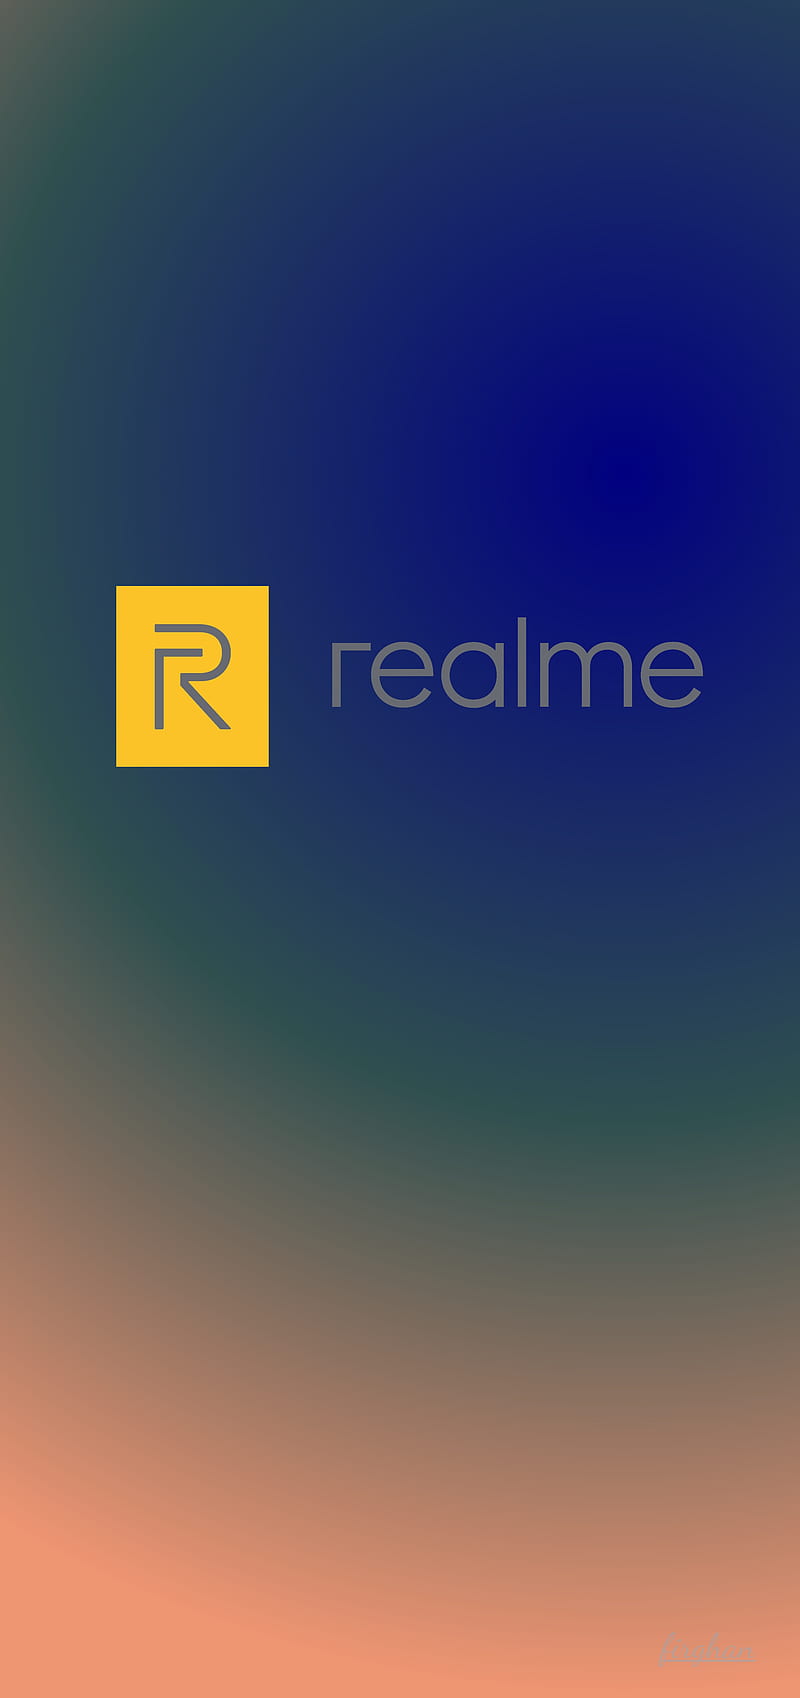 Realme logo issue in custom watermark - realme Community-donghotantheky.vn